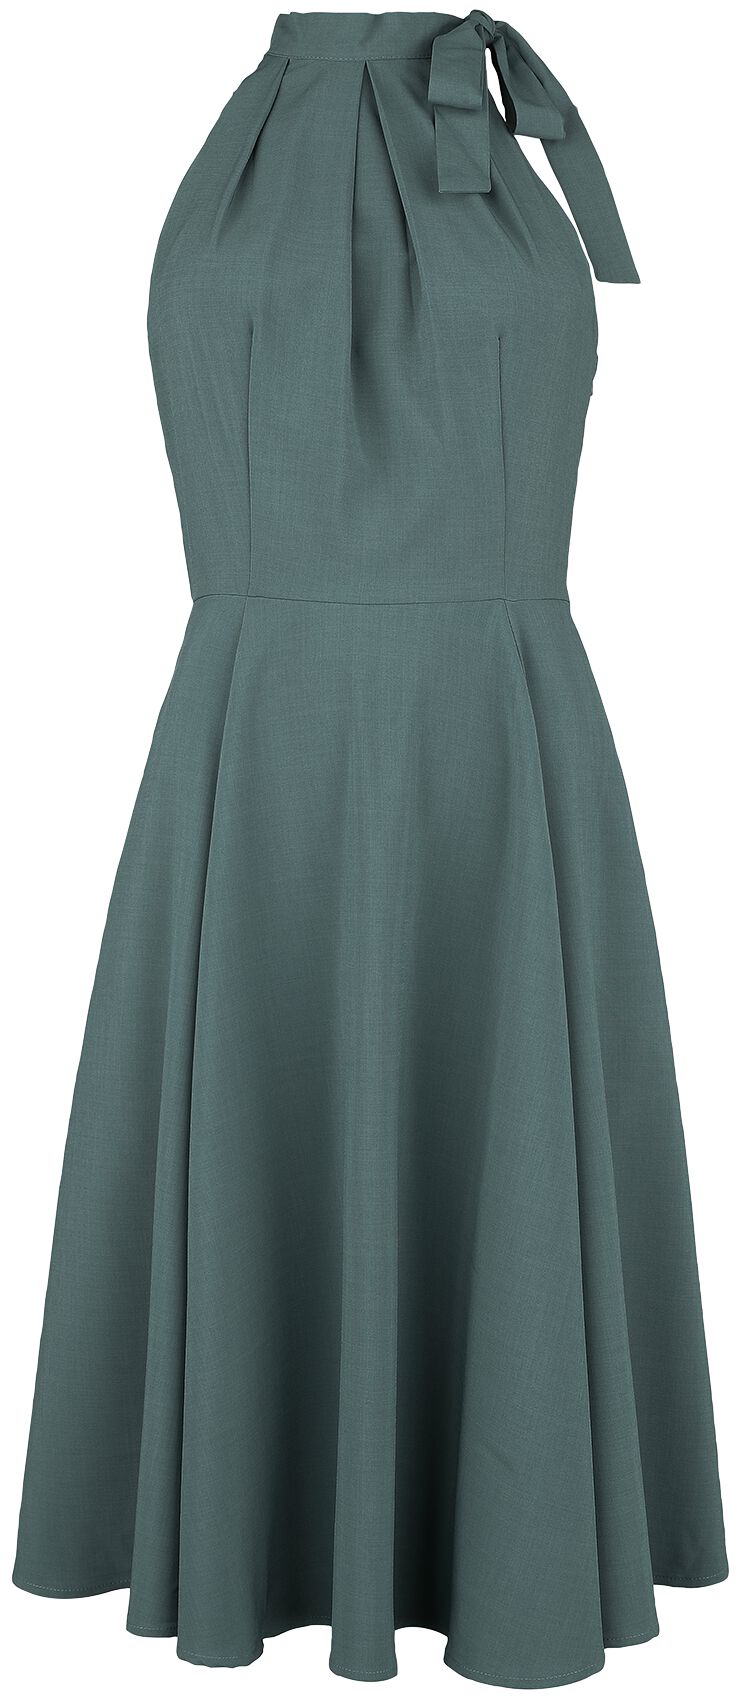 H&R London - Rockabilly Kleid knielang - Kira Swing Dress - XS bis XXL - für Damen - Größe S - grün